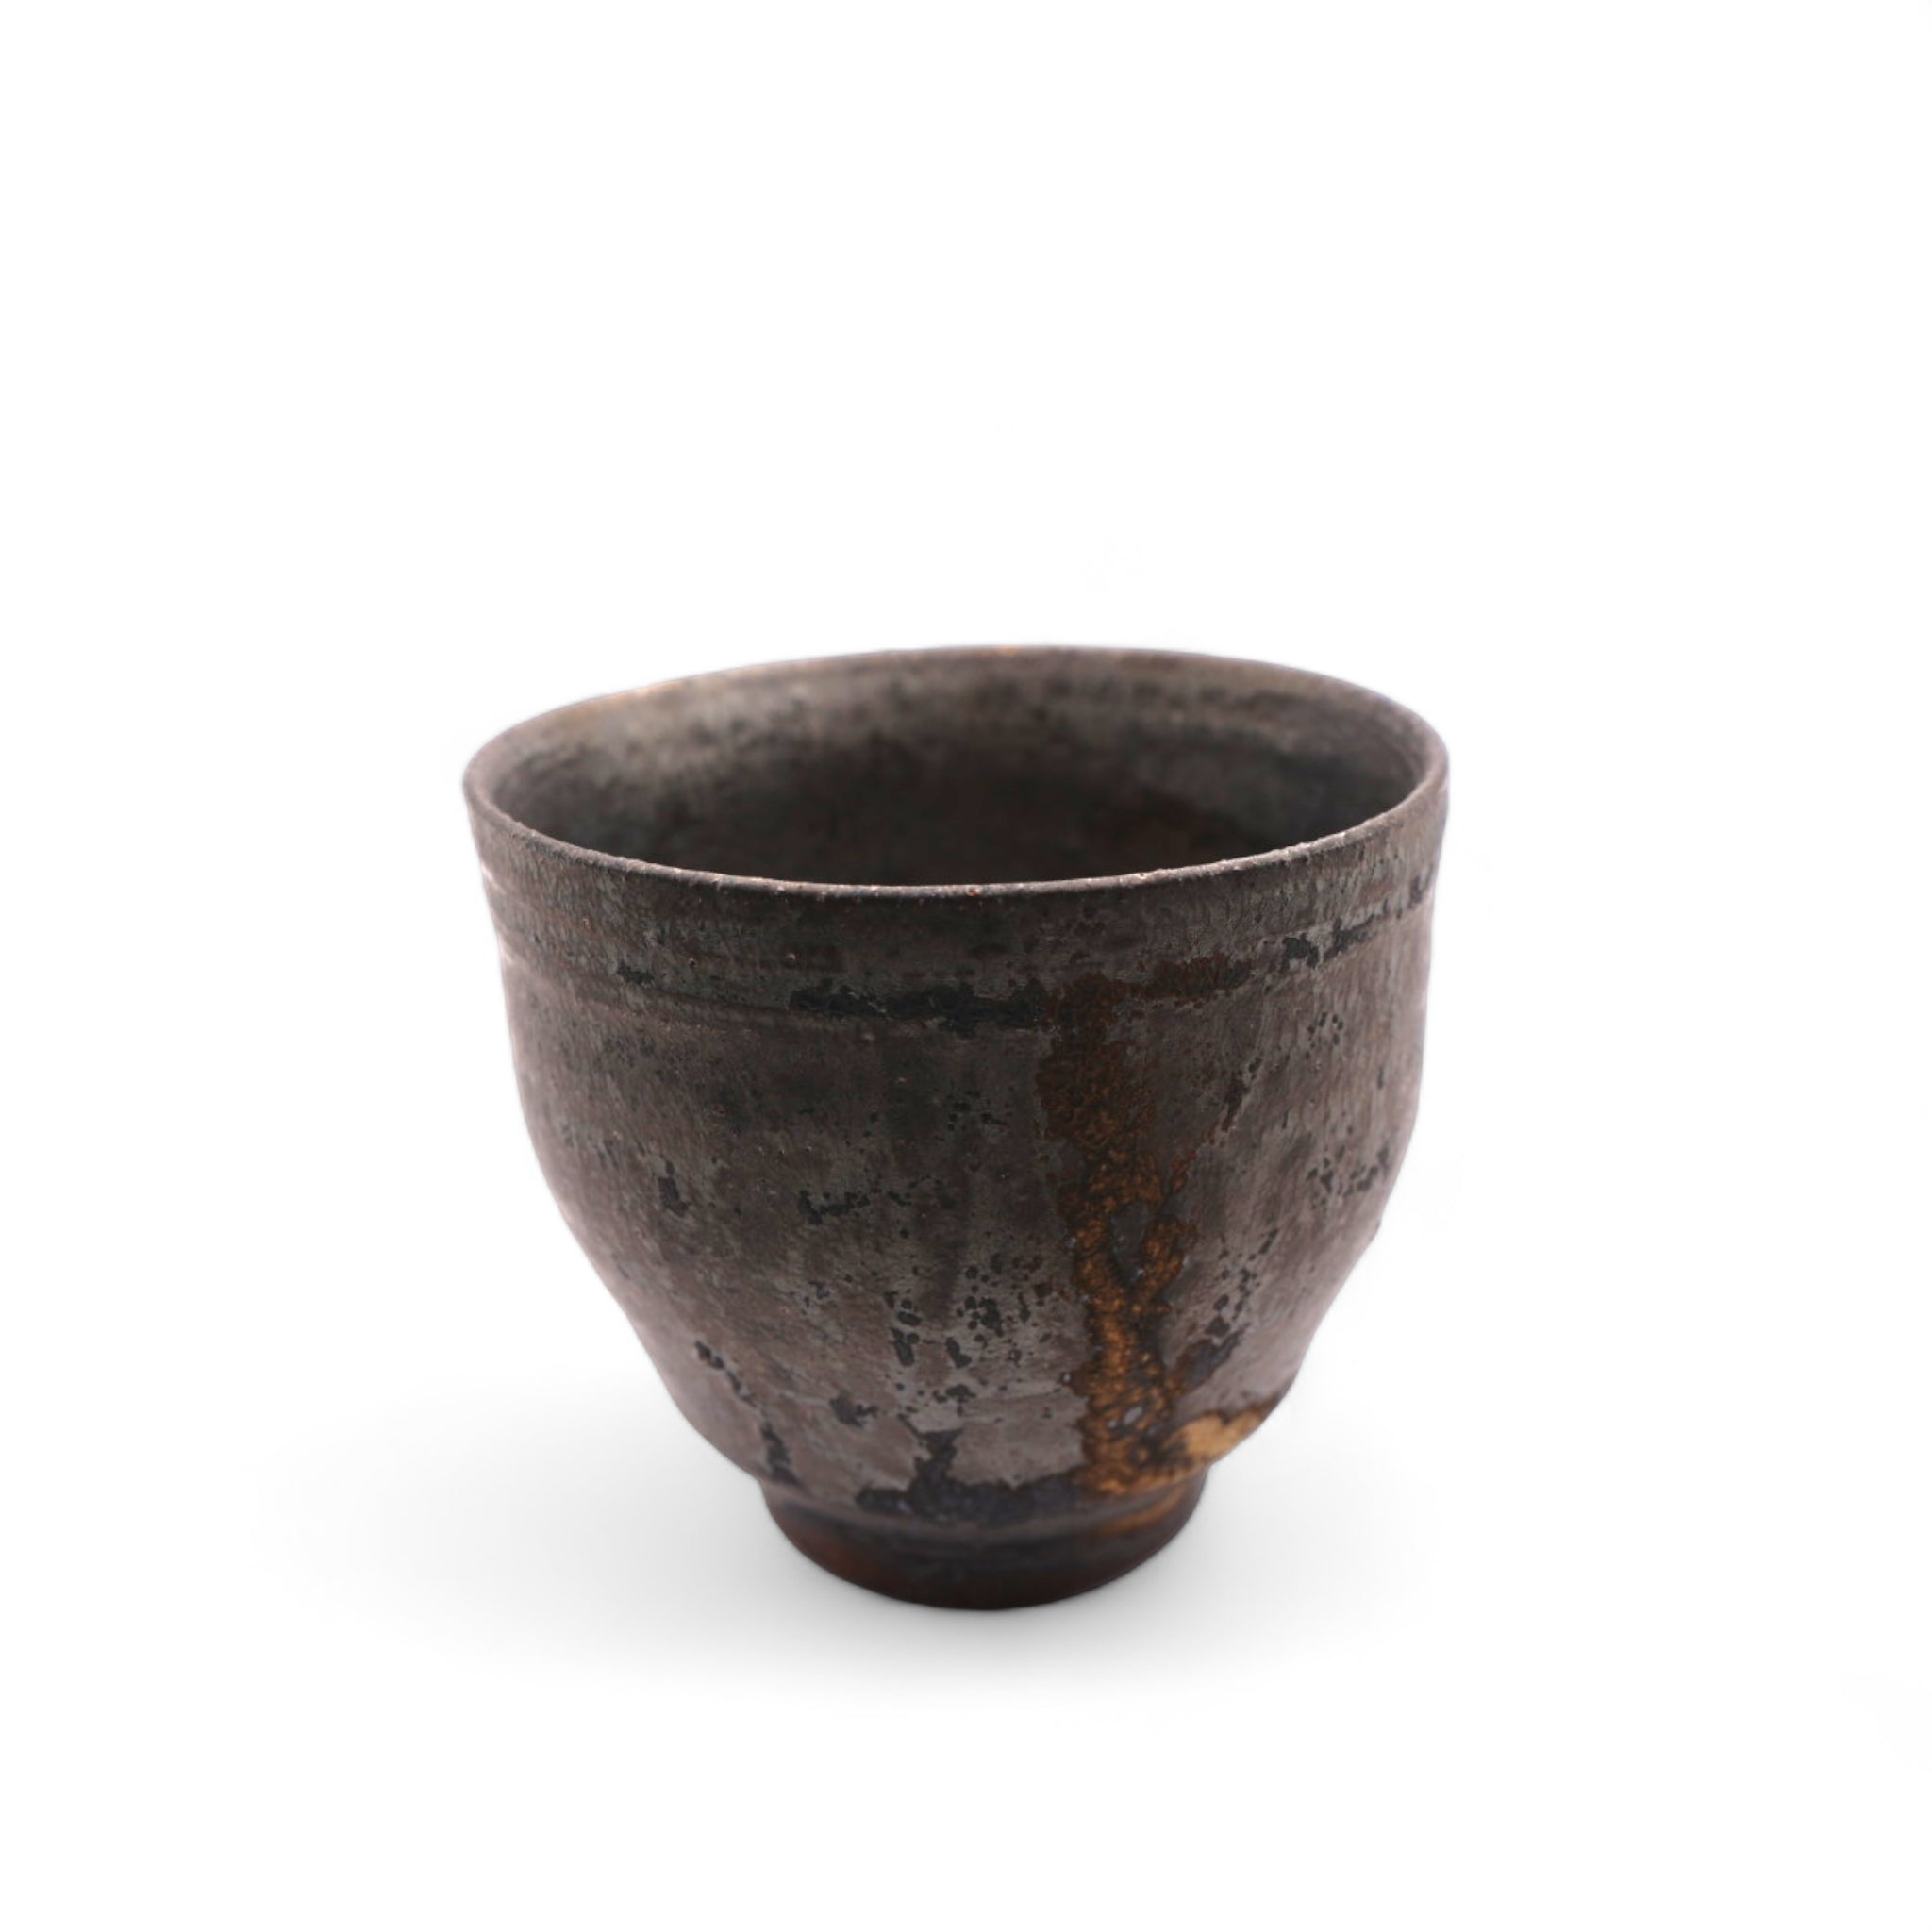 Handmade Wood-Fired Ceramic Teacup - Mythic Metal